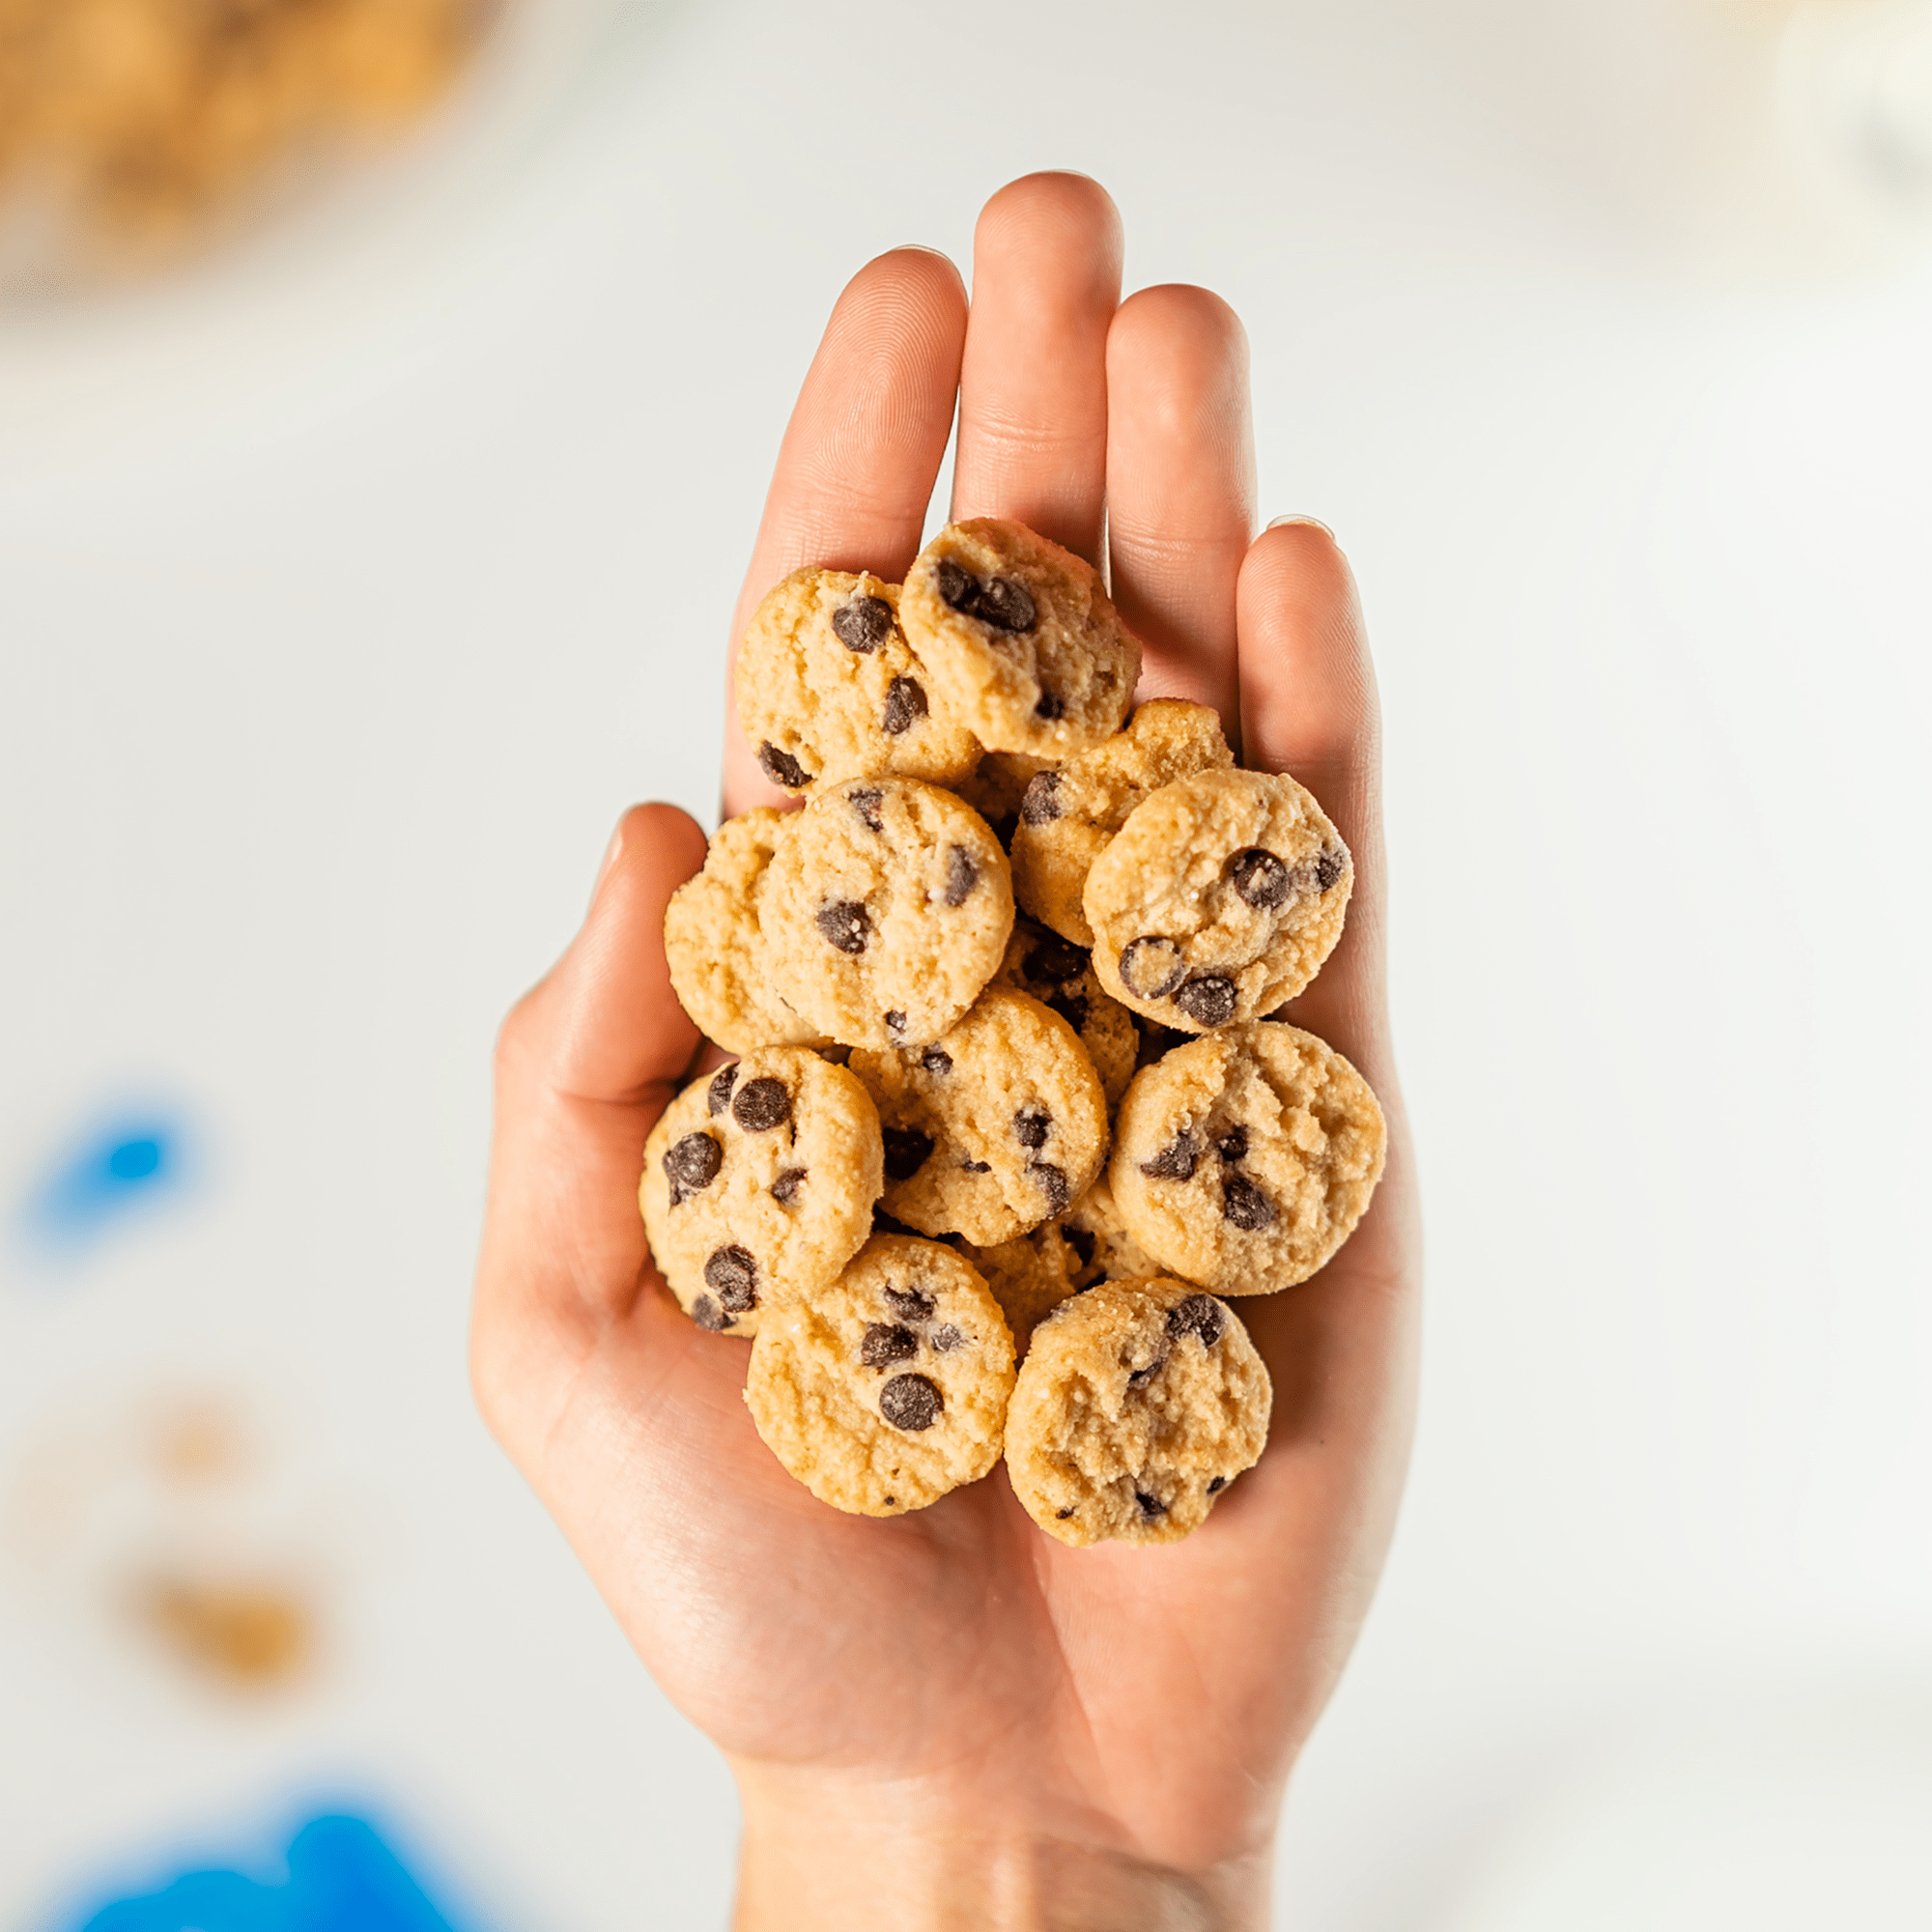 Mini Cookies: Chocolate Chip 6pack